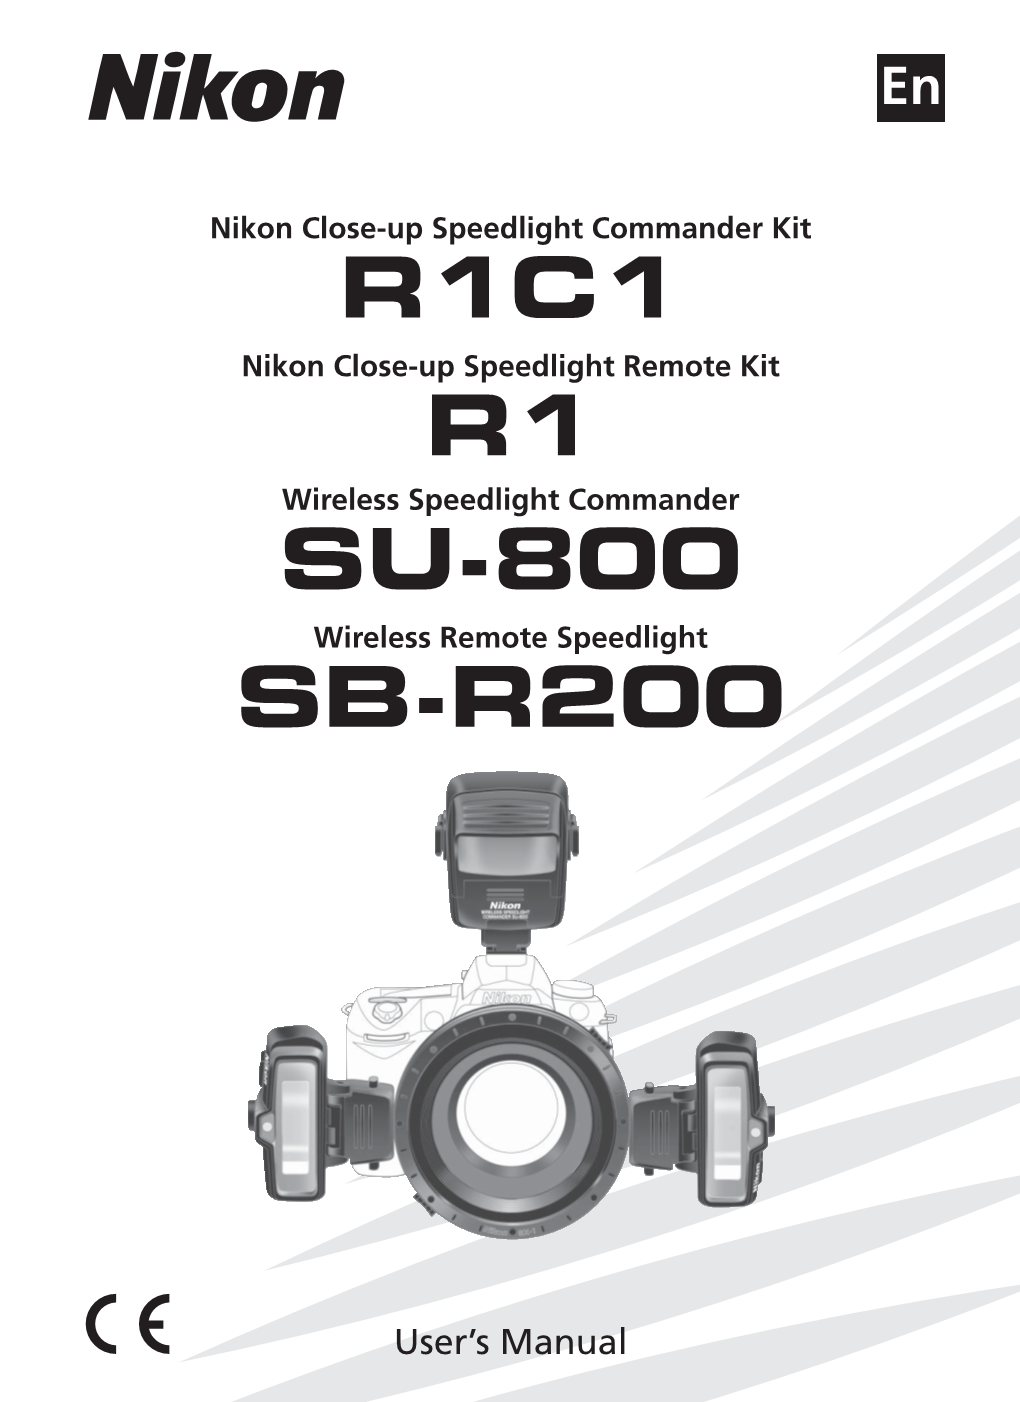 R1c1 R1 Su-800 Sb-R200